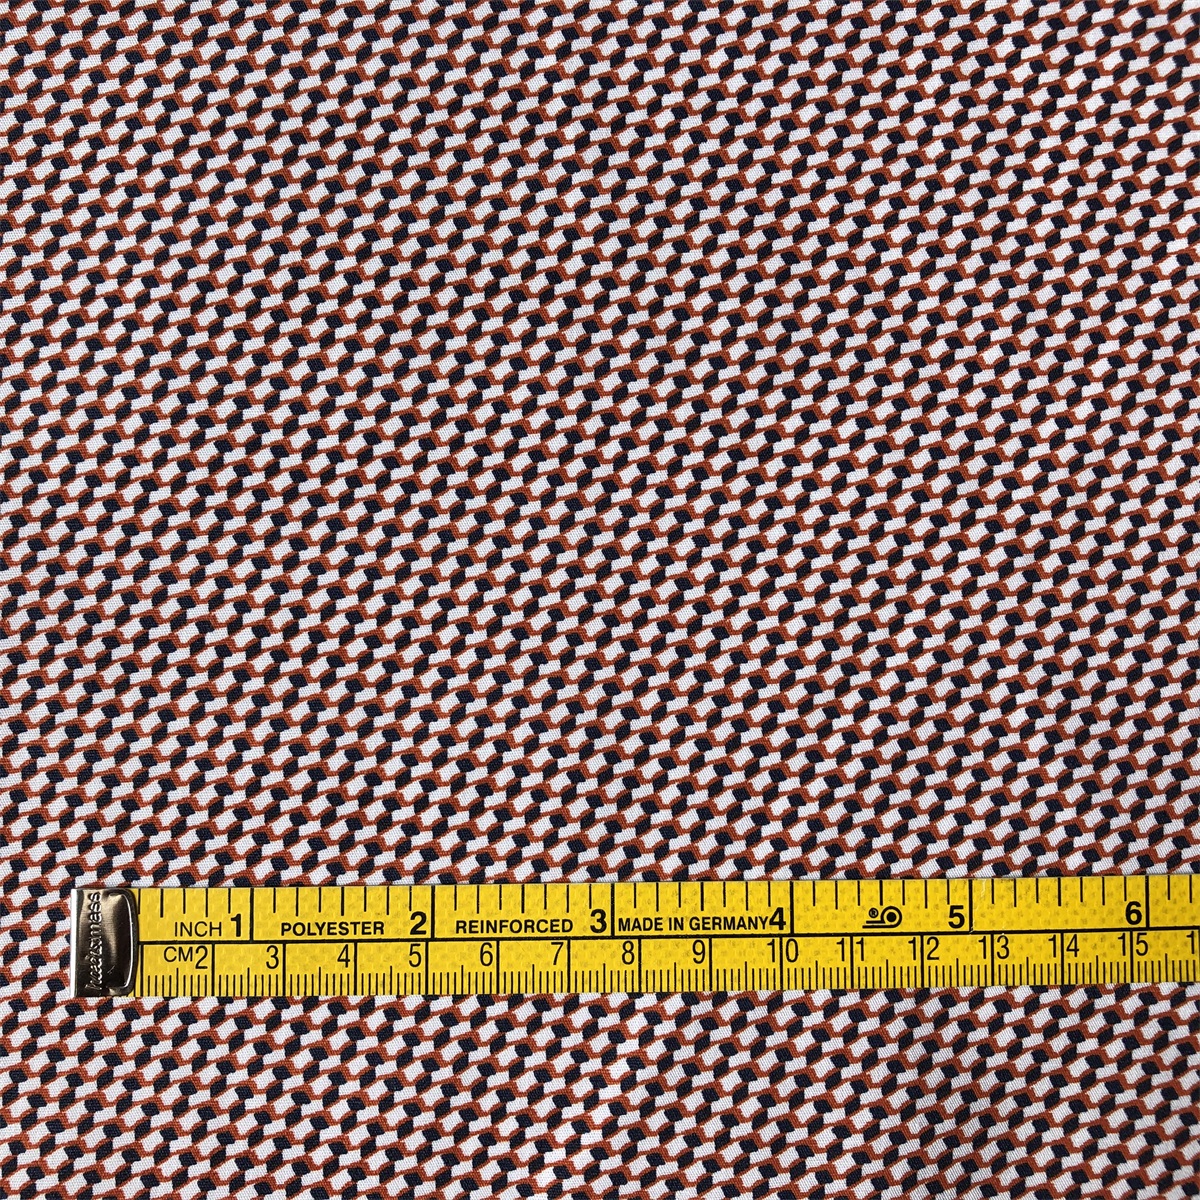 Sun-rising Textile Cotton fabric hot sale fashion design 100% cotton poplin printed fabric for men's casual shirts